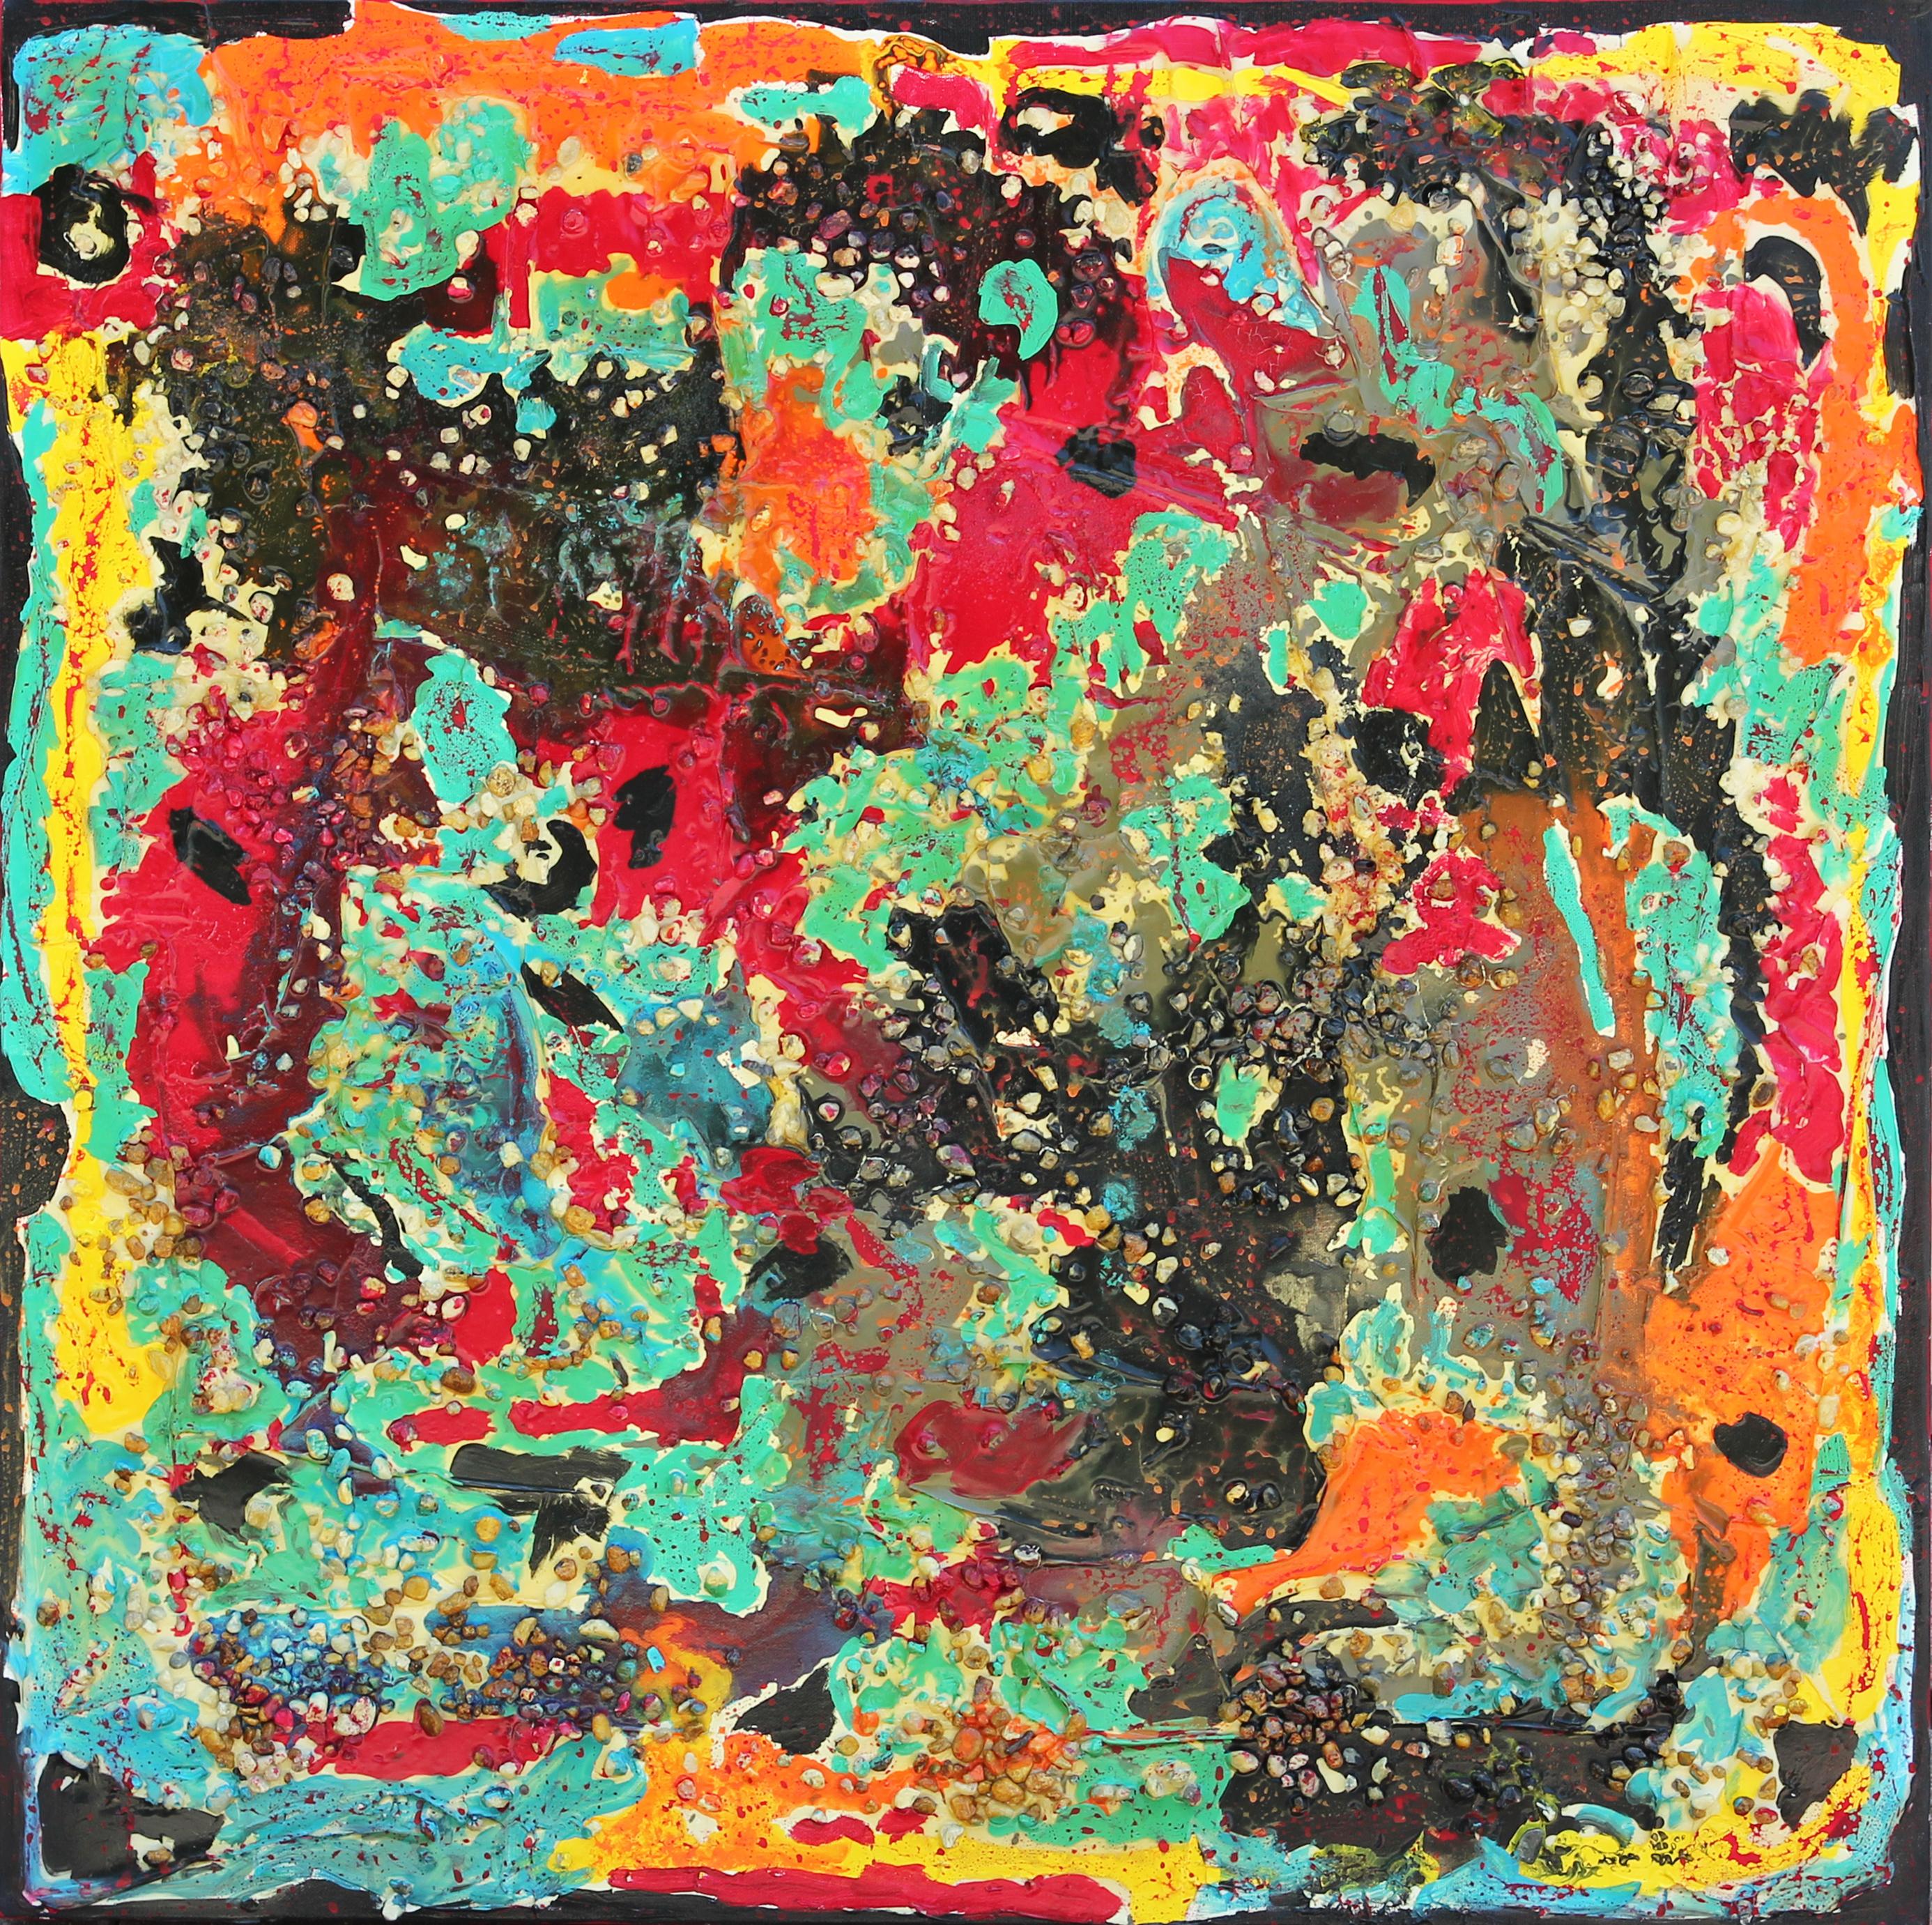 "Ramshackle" - Abstrait vert, rouge, turquoise et orange avec galets - Mixed Media Art de Paul Reeves